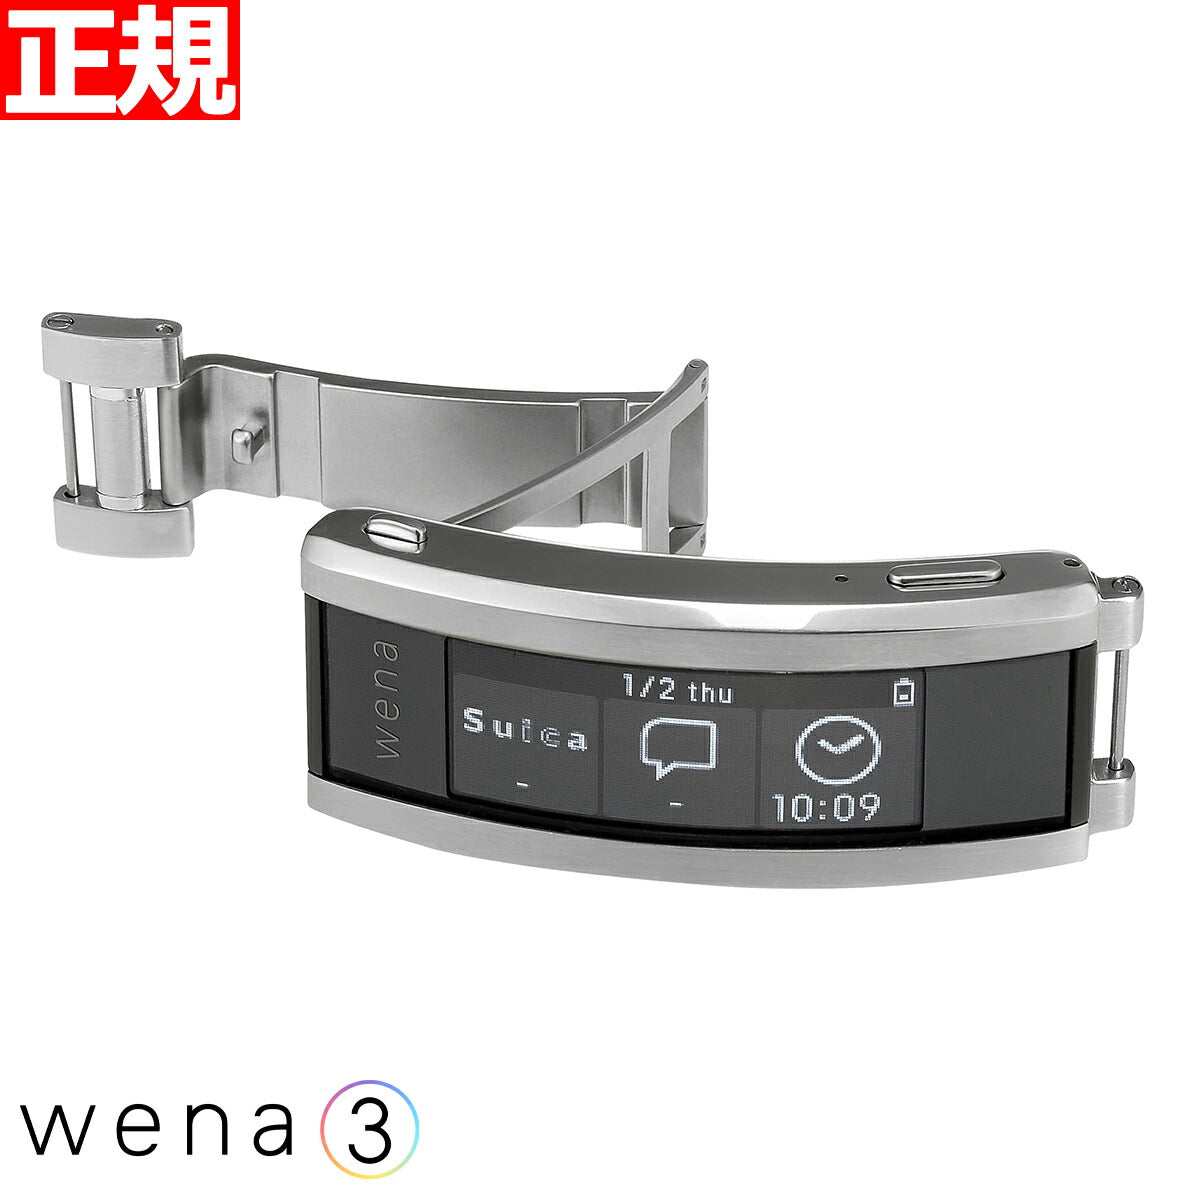 wena3 SONY オメガ OMEGA スピードマスター レーシング互換性モデル